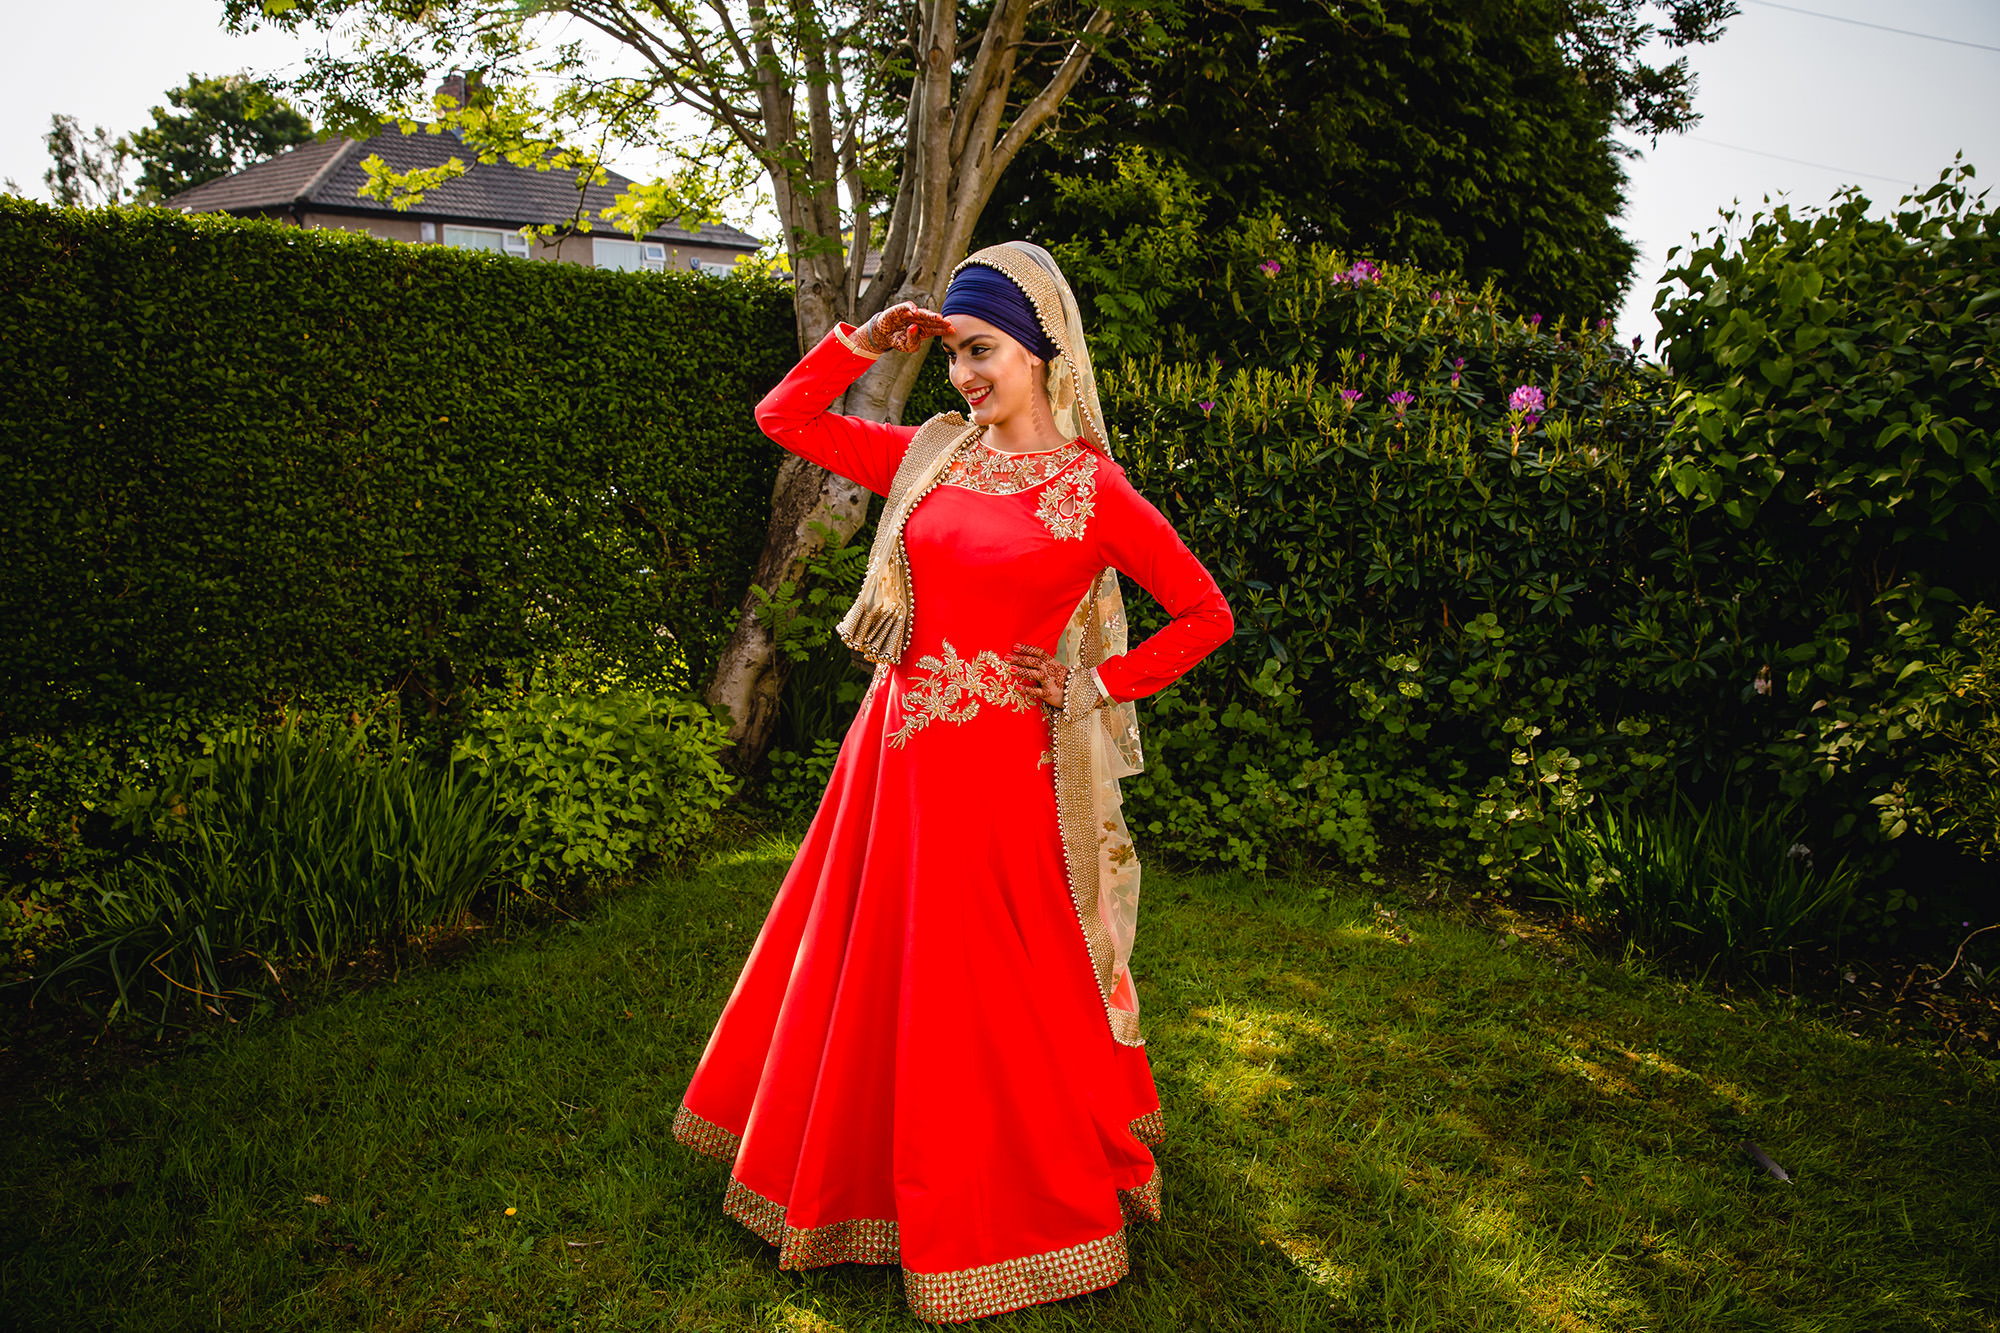 bridal portrait in her garden in her indian wedding outfit